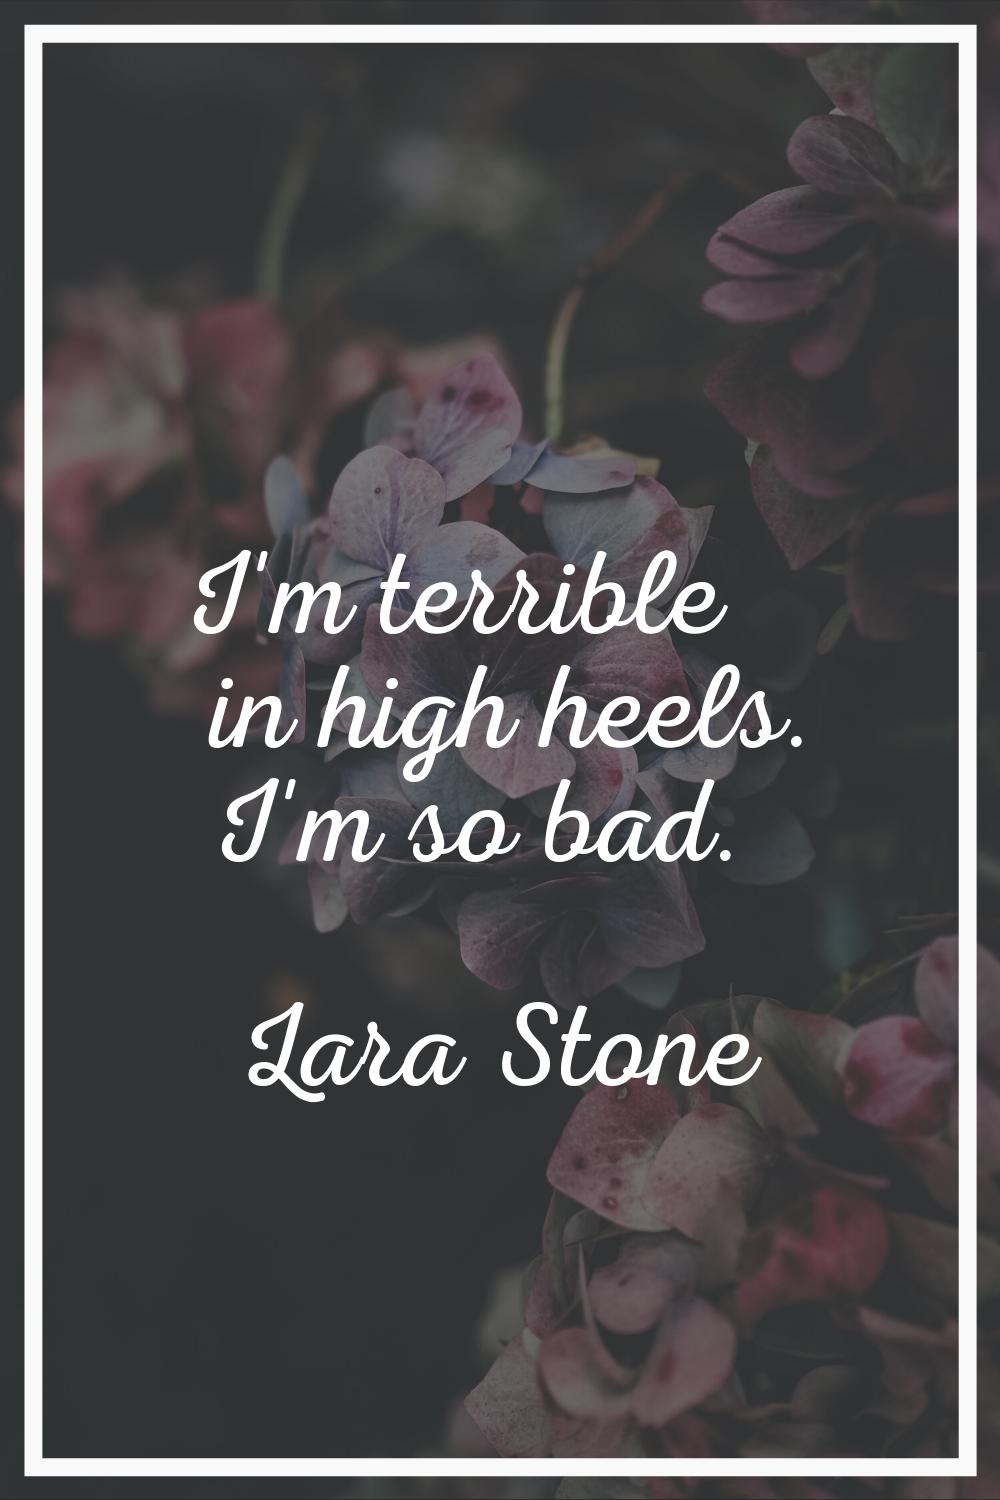 I'm terrible in high heels. I'm so bad.